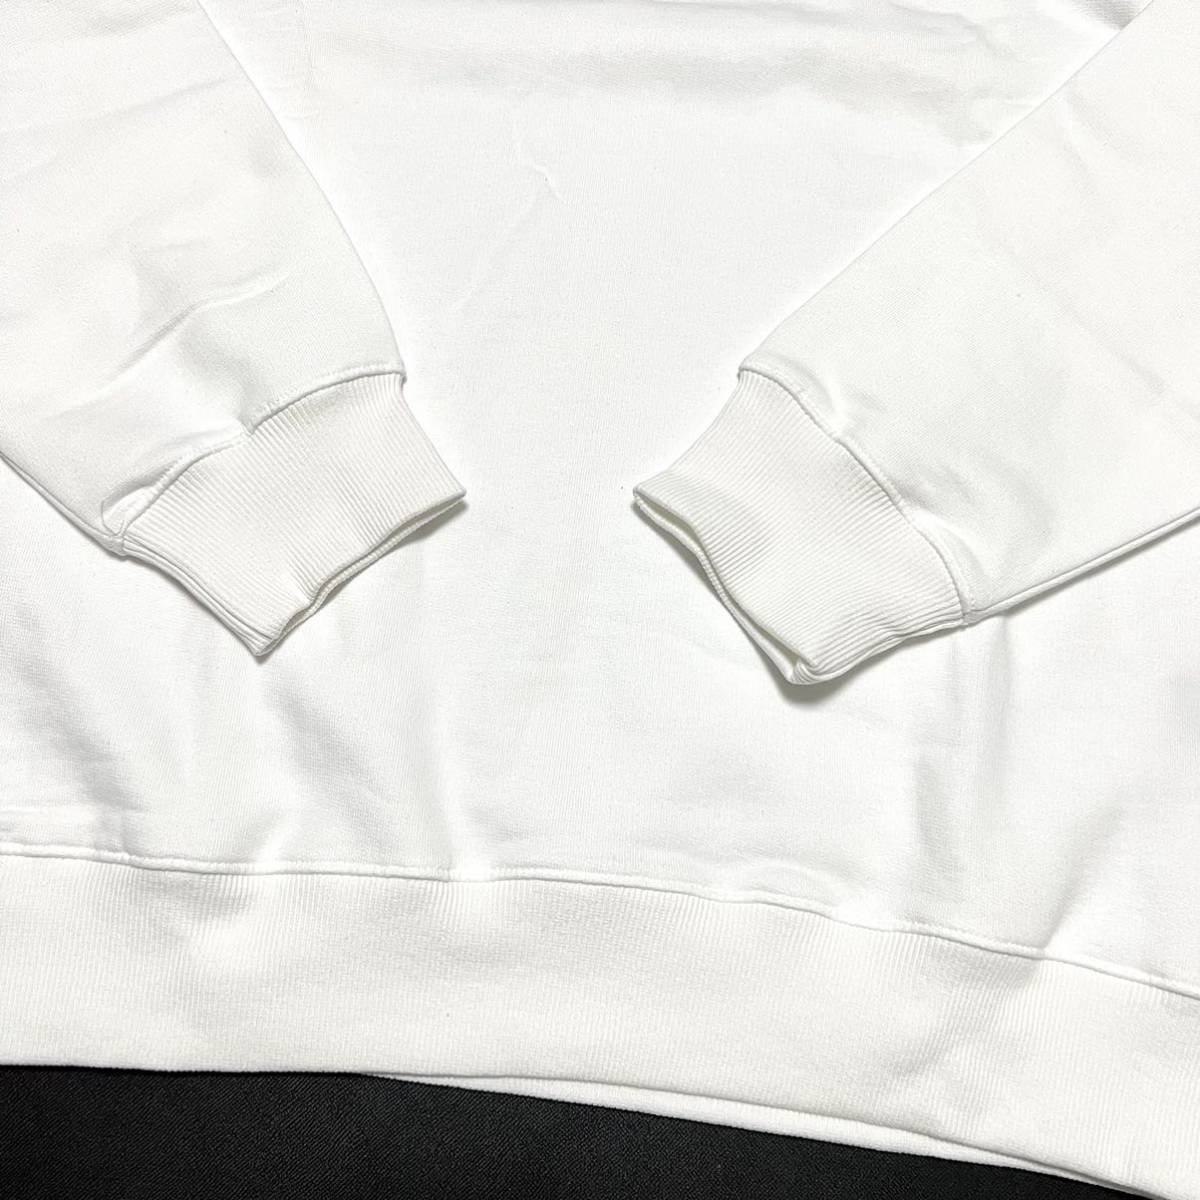 XL 新品 海外限定 ノースフェイス ネックロゴ スウェット トレーナー 白 襟 ロゴ 襟ロゴ ホワイト ネック 襟元 日本未発売 ロゴスウェット